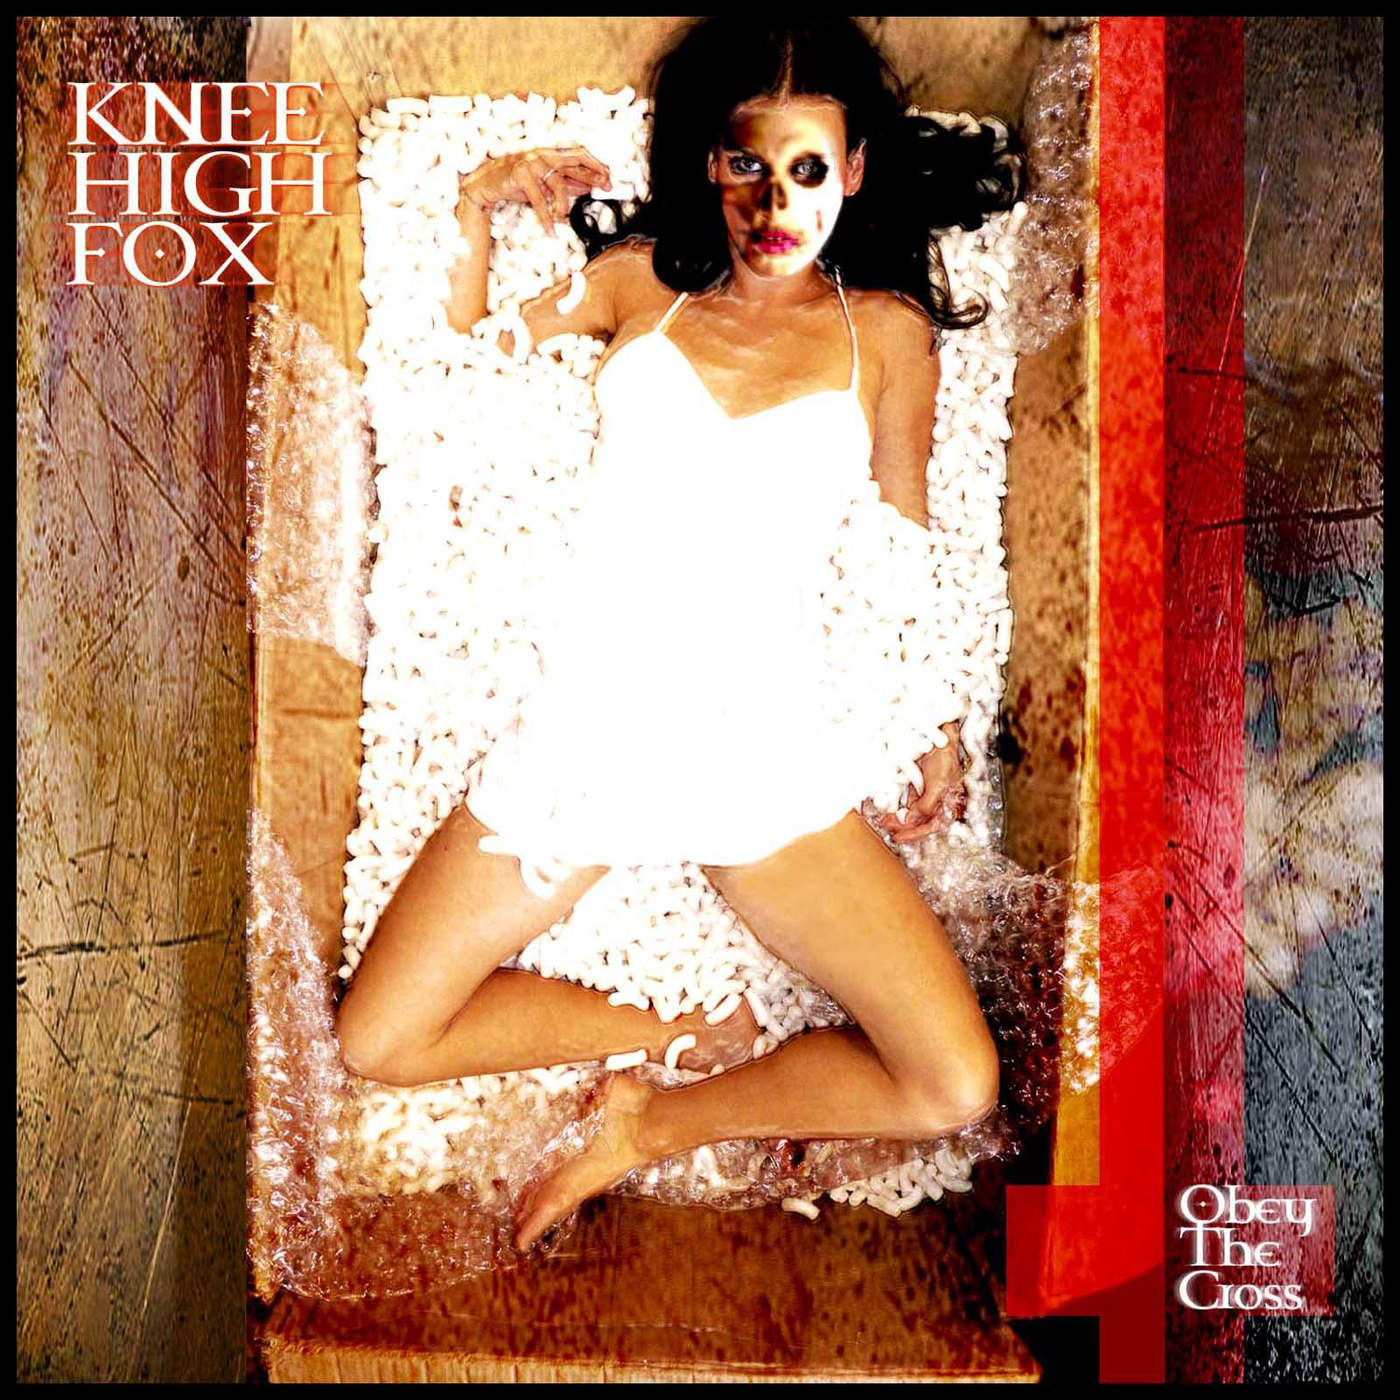 Knee High Fox - Obey the Cross (2015)